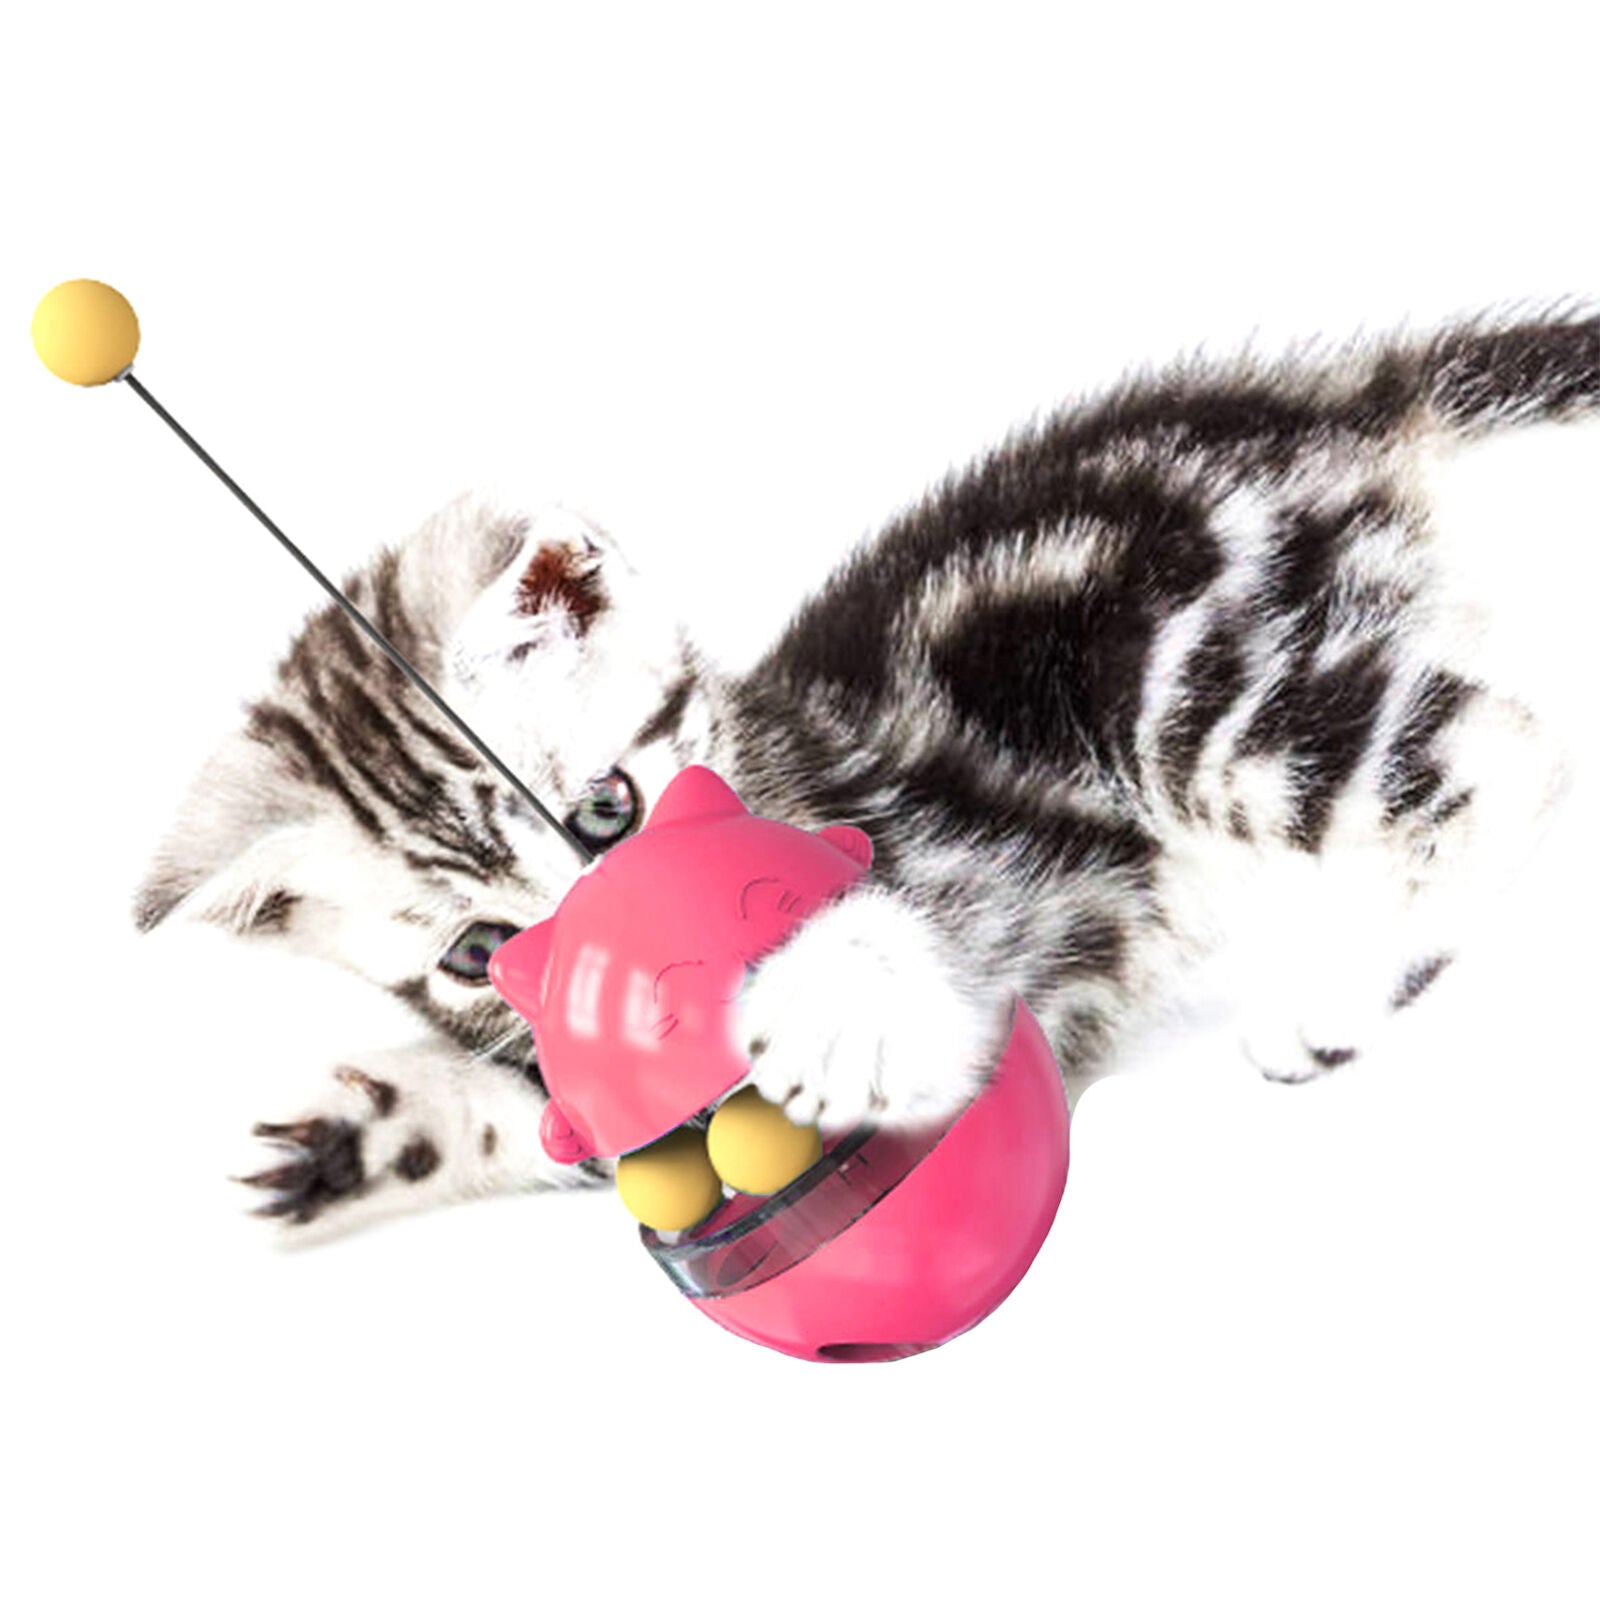 Kitten/Cat Tumbler Treat & Food Dispenser pets-park-pk